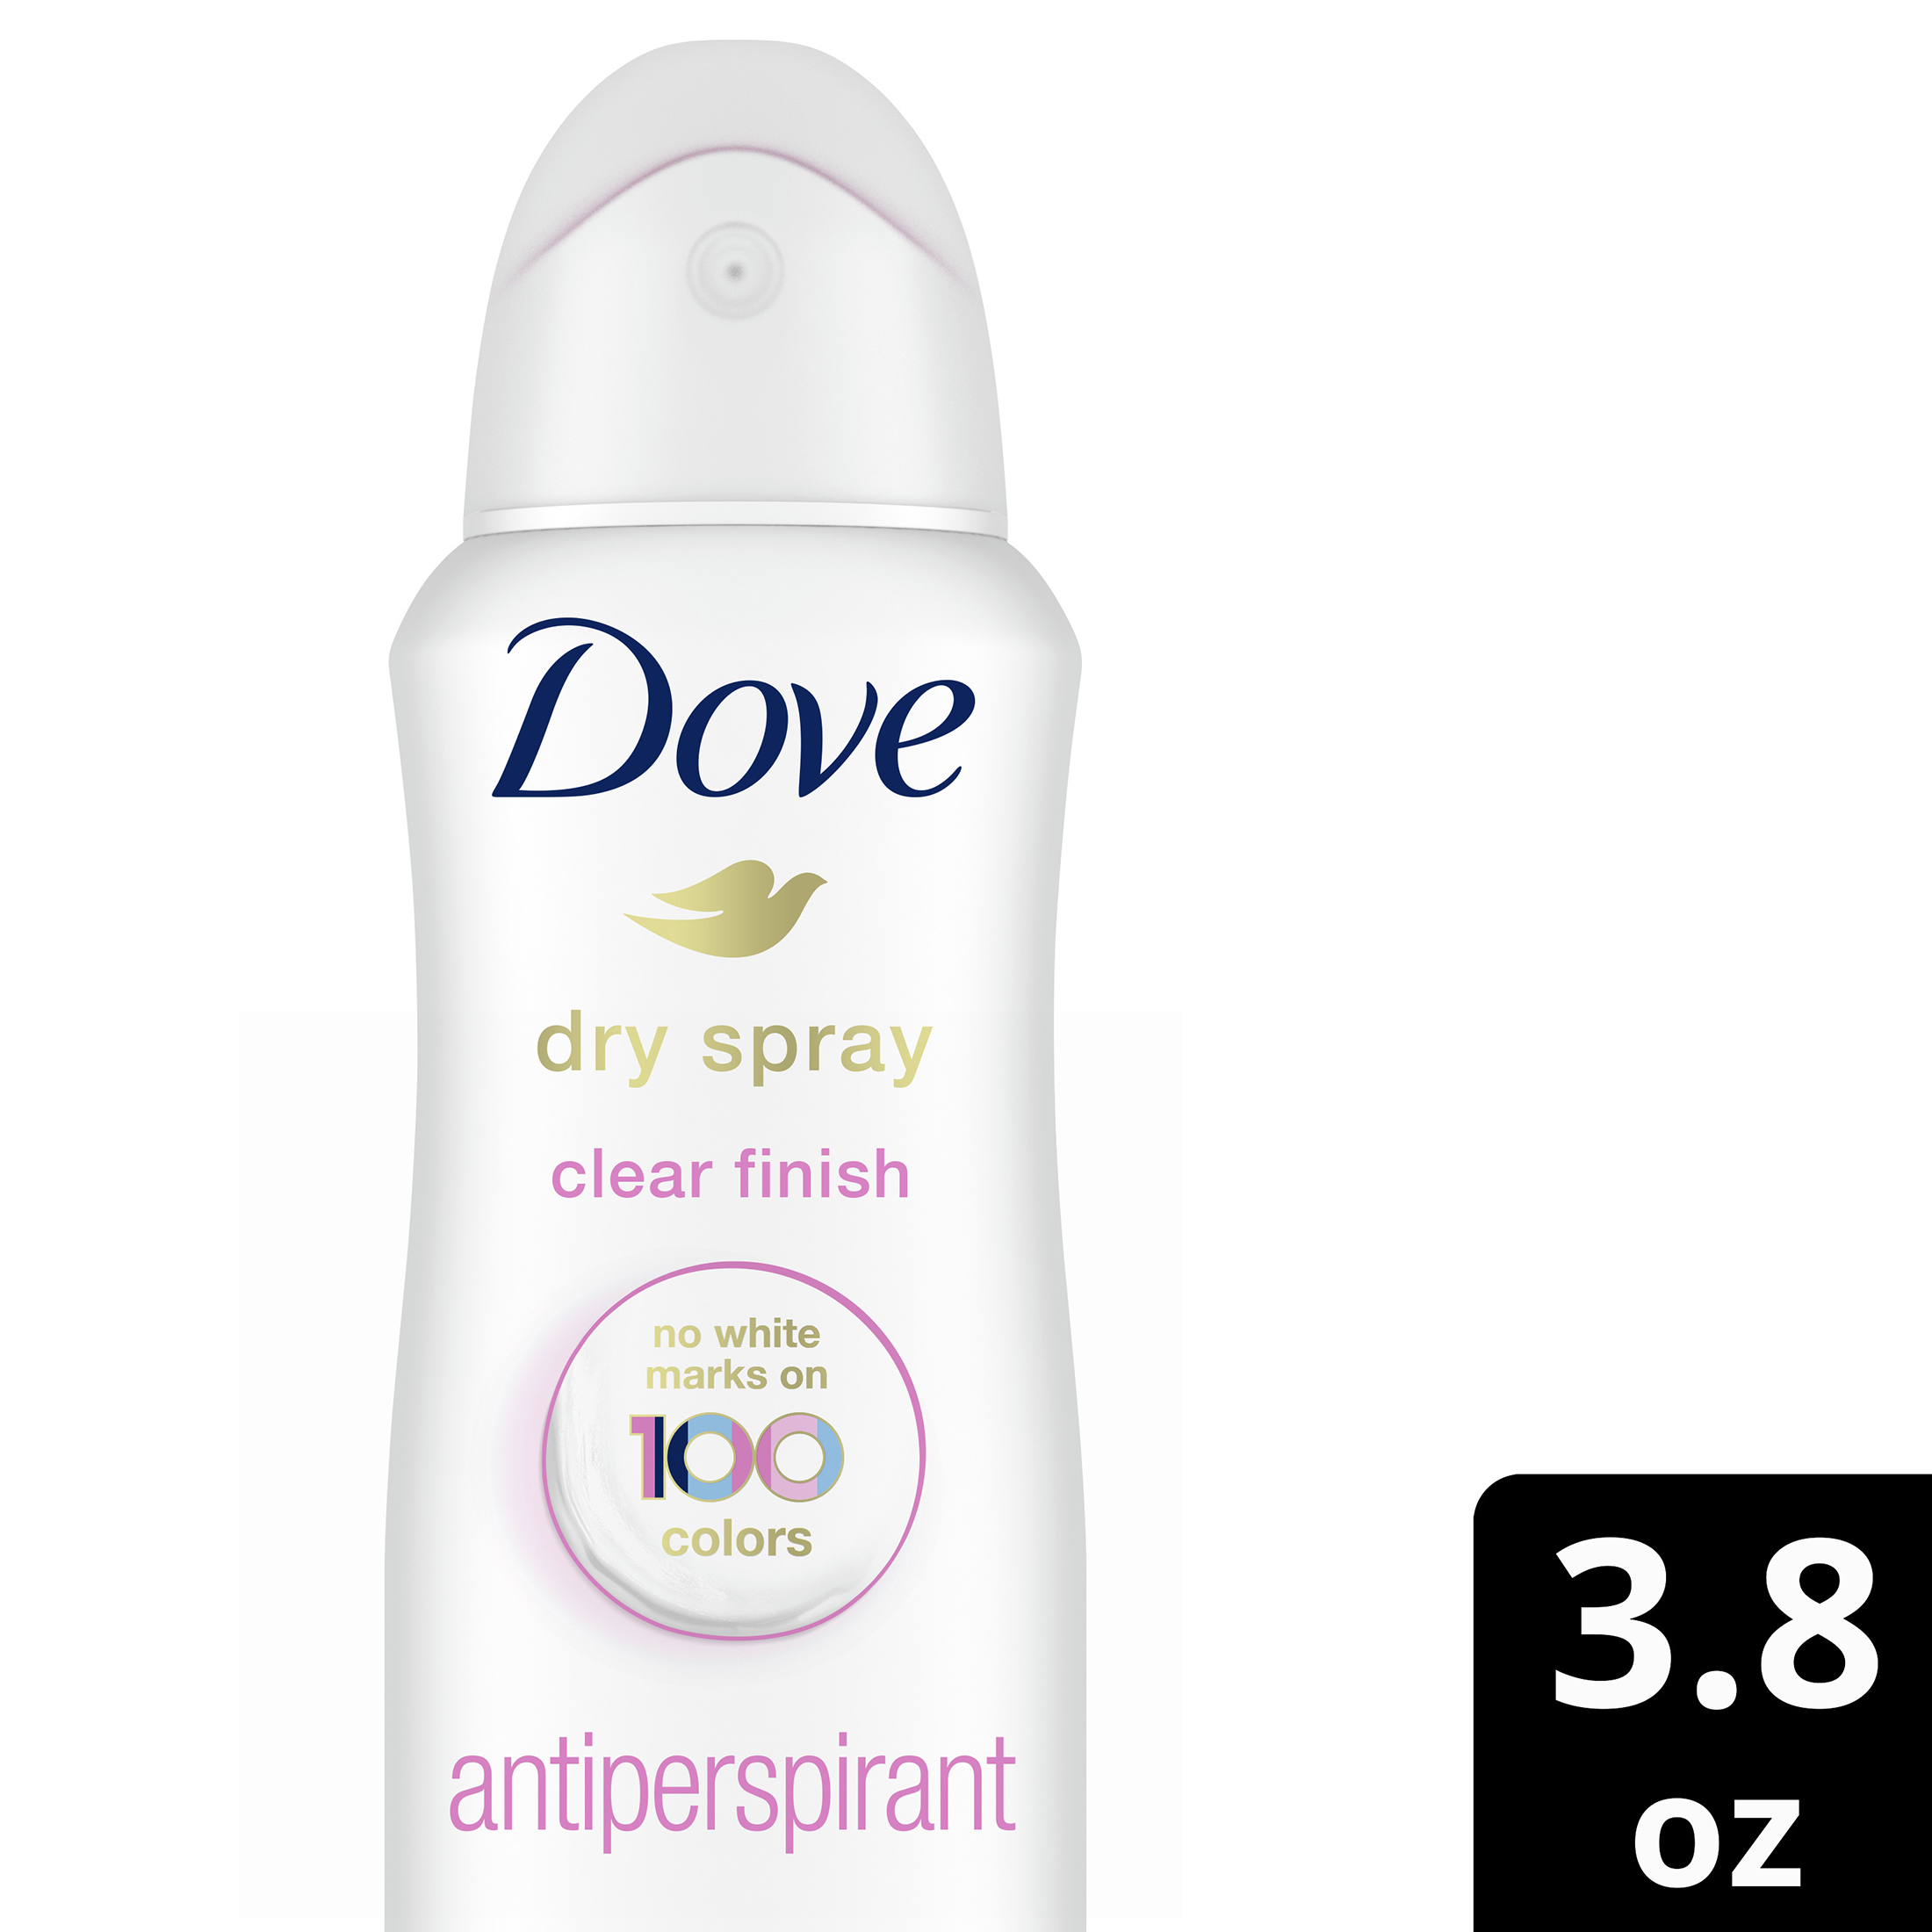 Dove Advanced Care Long Lasting Women's Antiperspirant Deodorant Dry Spray, Clear Finish, 3.8 oz - image 2 of 9